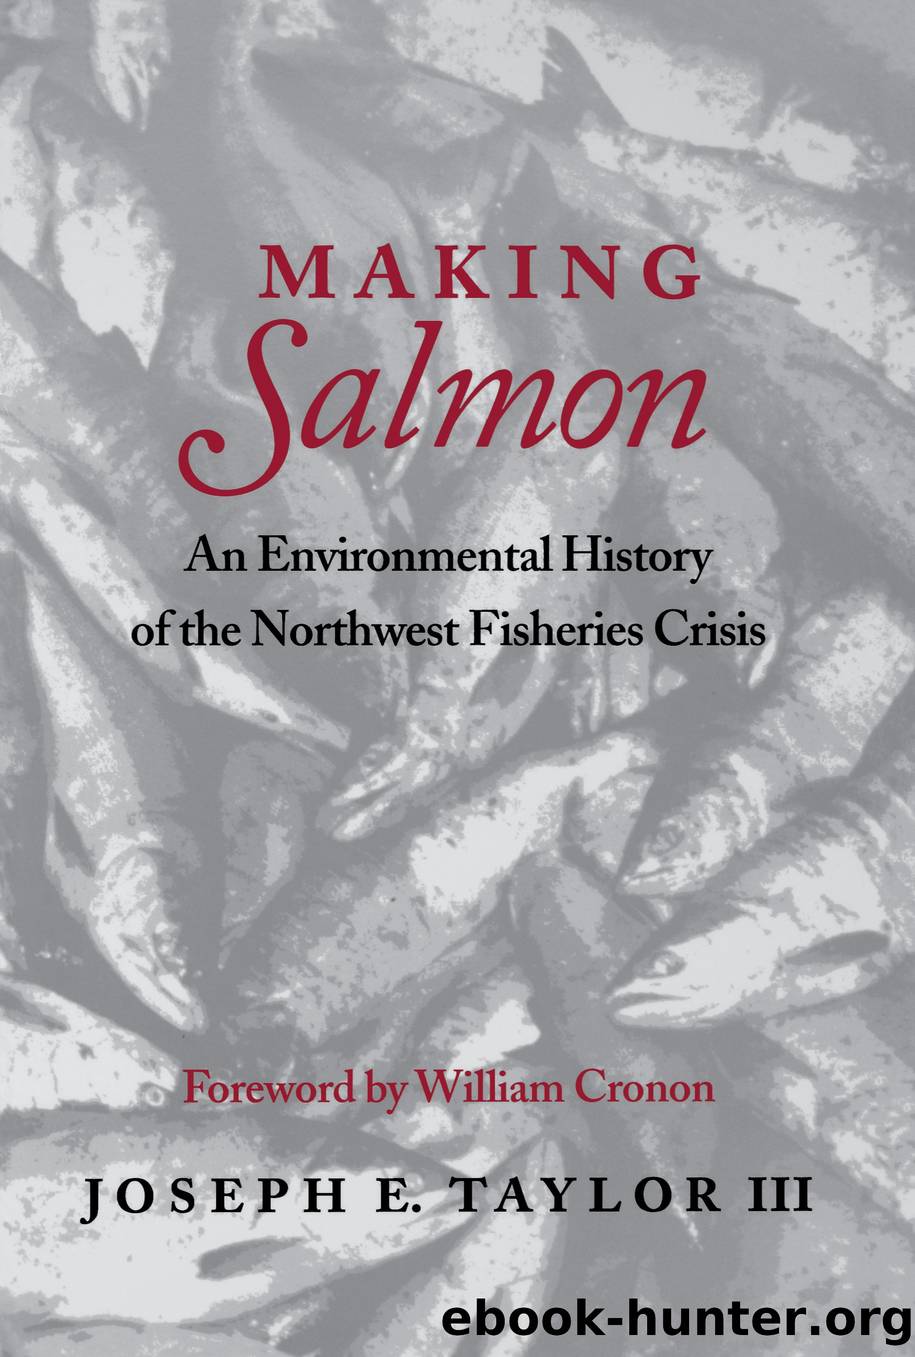 Making Salmon by Joseph E. Taylor III